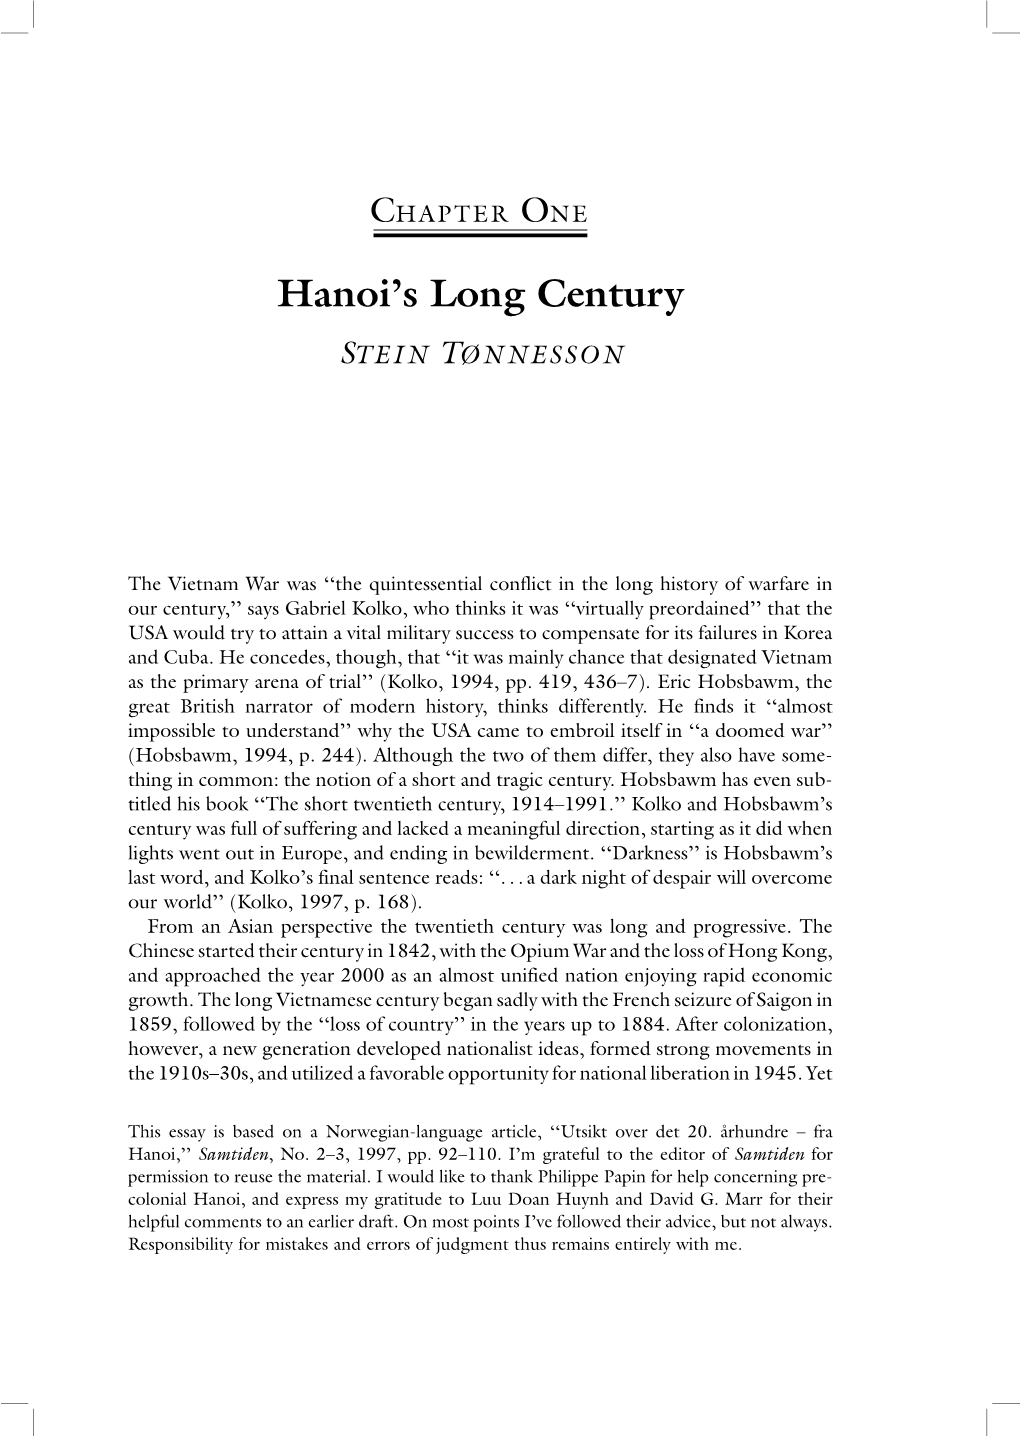 Hanoi's Long Century